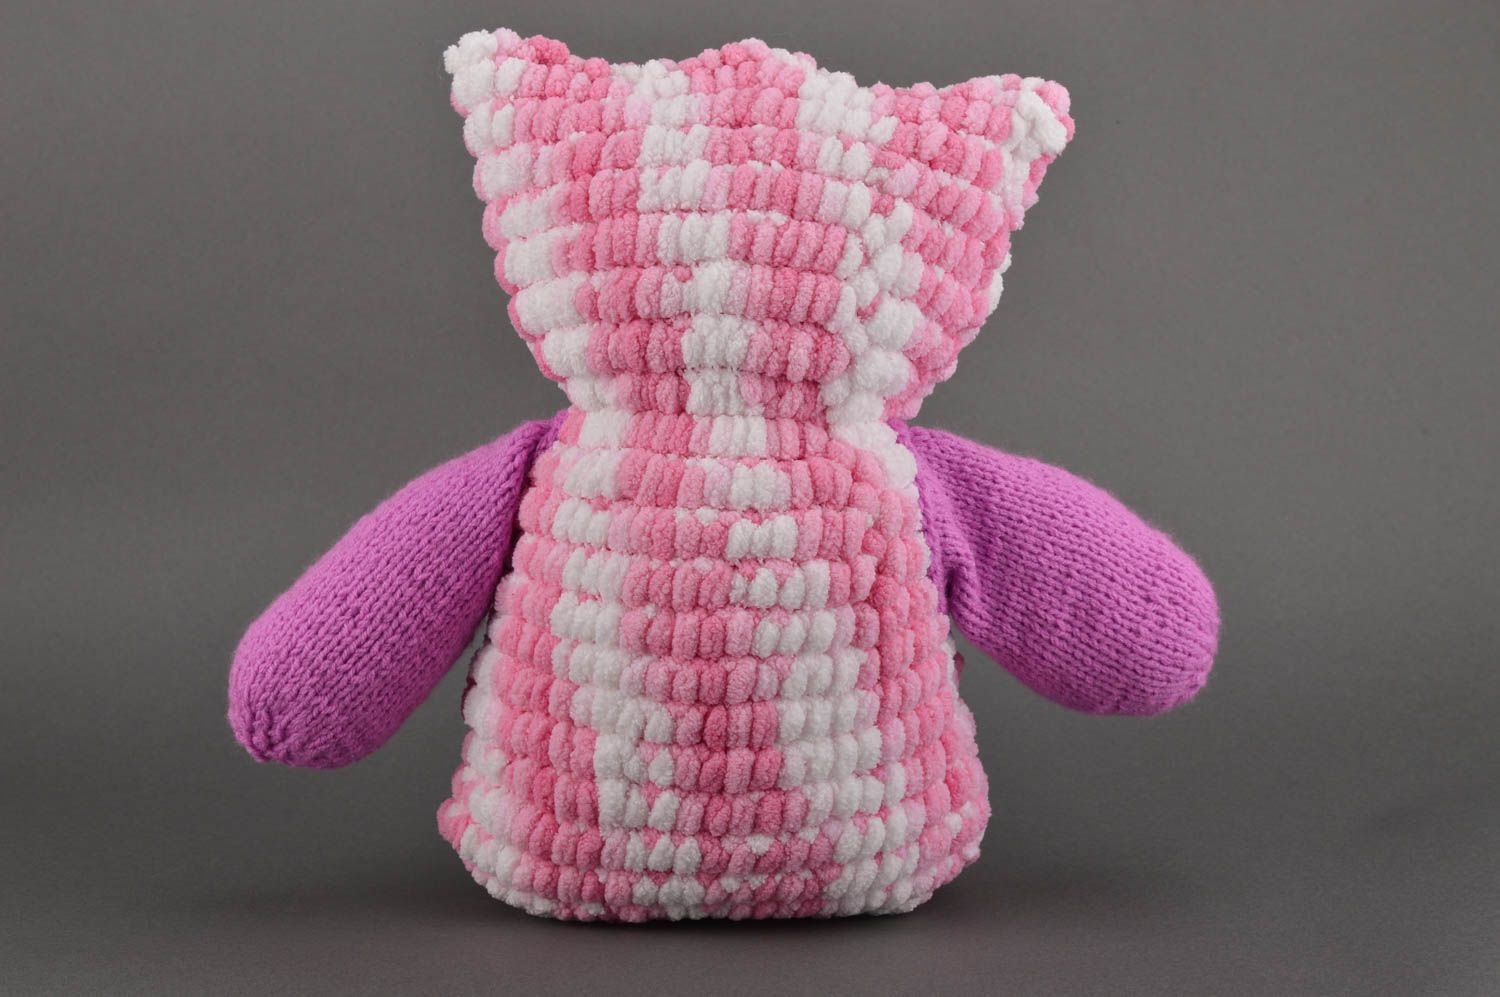 Handmade soft owl toy decorative stuffed toy gift for baby nursery decor ideas photo 4